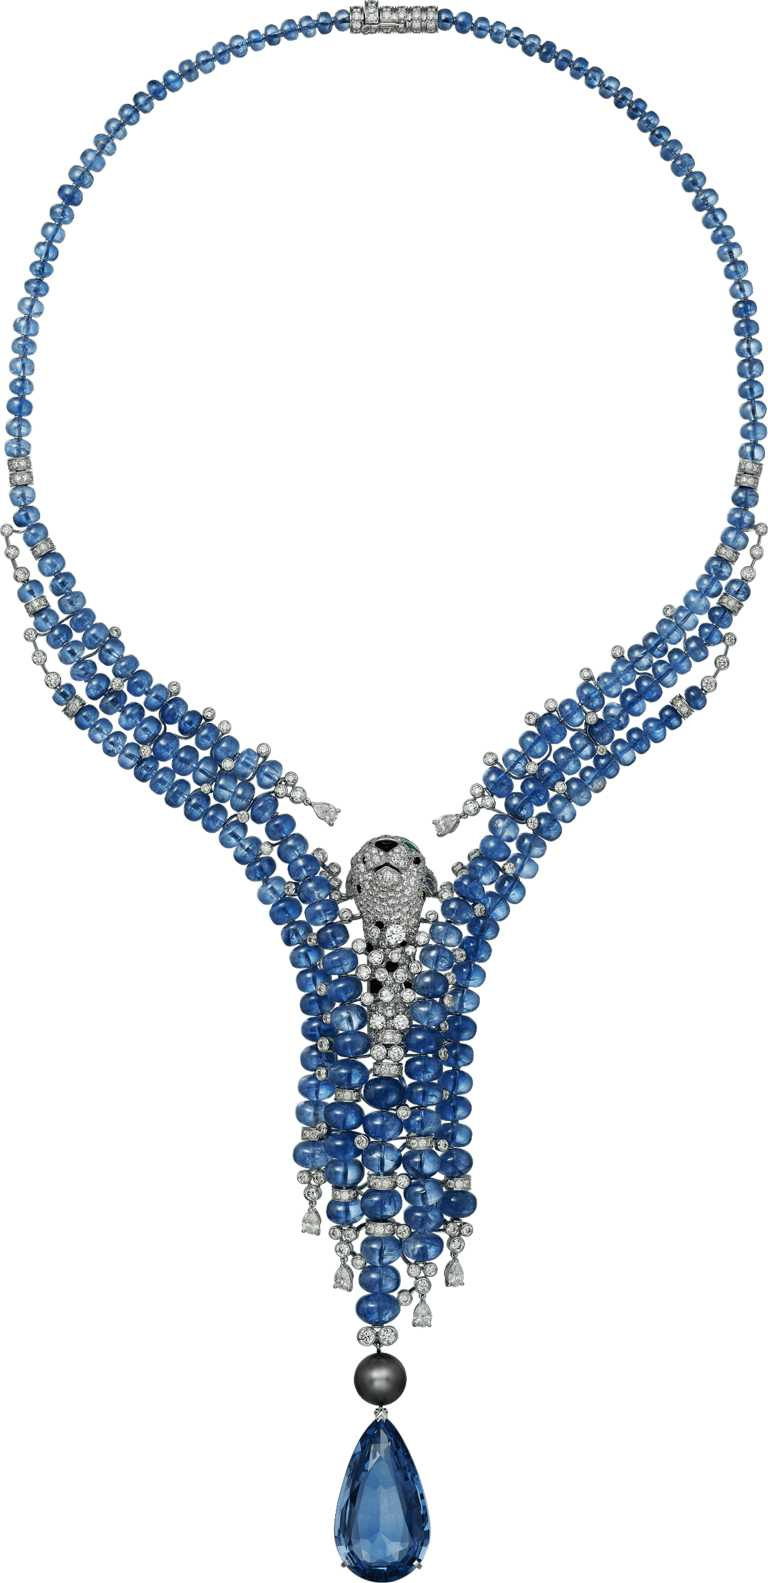 Cartier「L'AVENTUREUSE冒險的」美洲豹藍寶石項鍊╱61,000,000元。（圖╱Cartier提供）